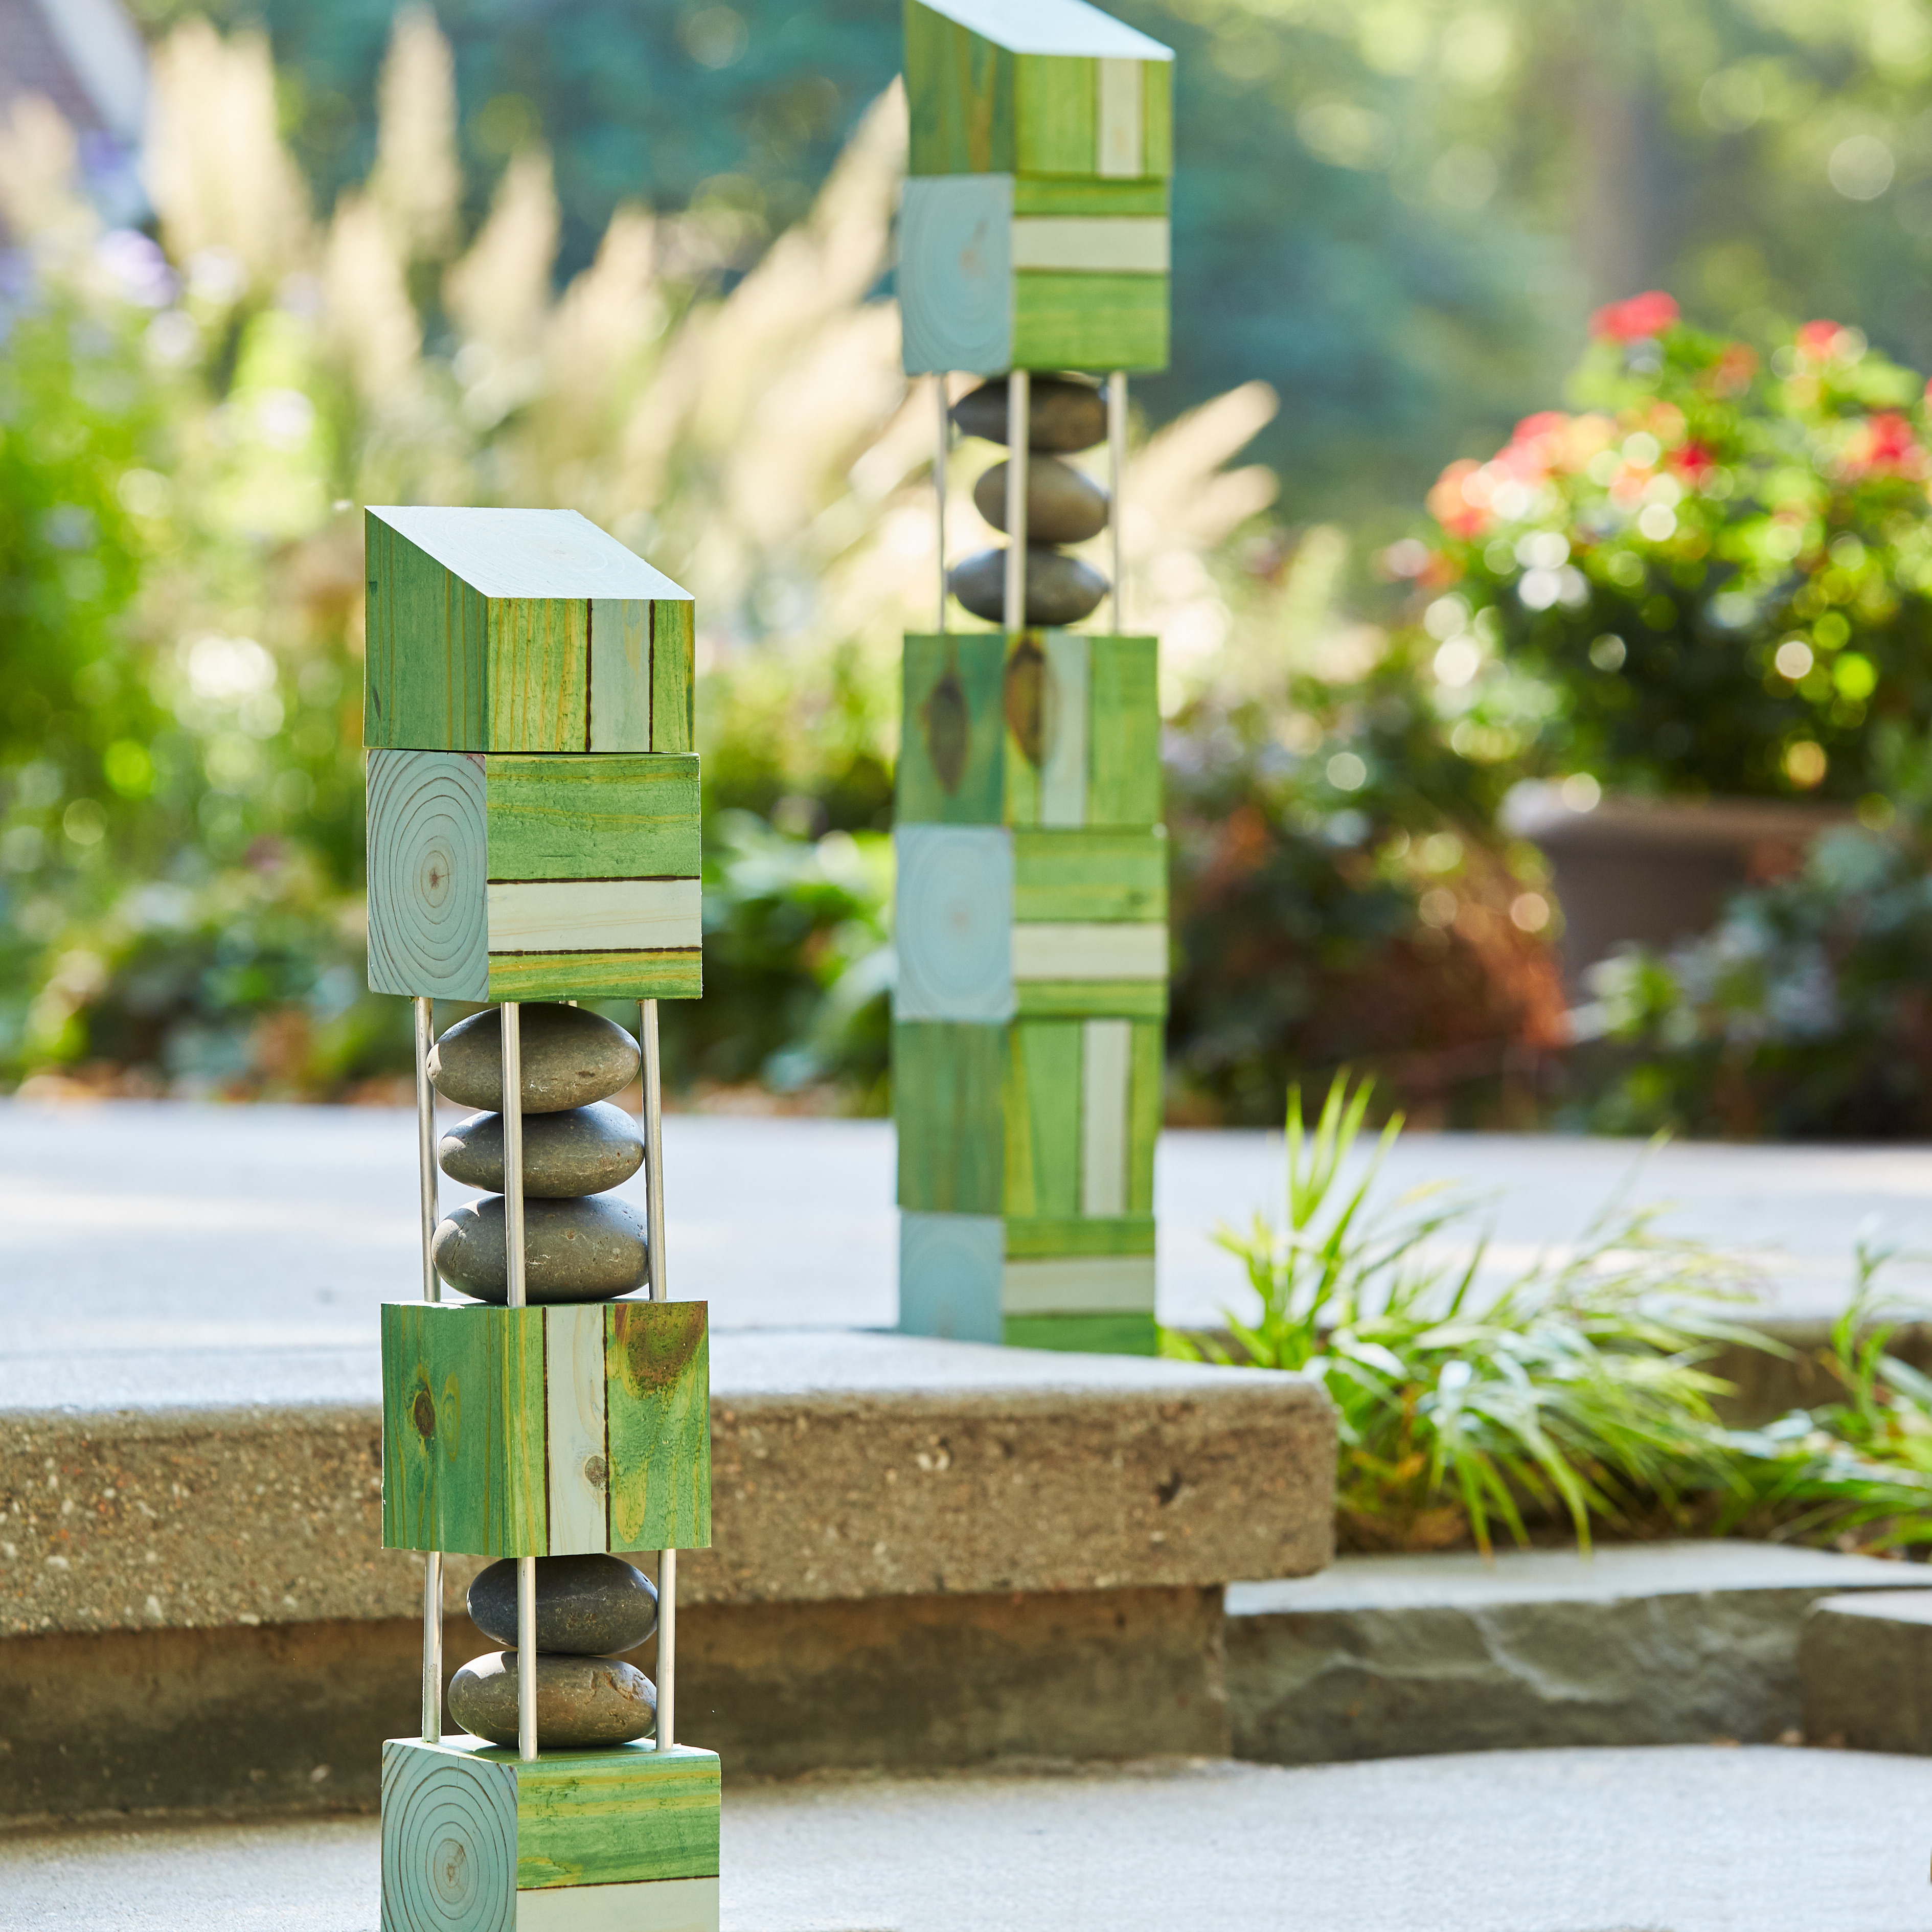 diy-garden-poles-block-design: A pair of garden poles help define the offset steps to prevent a stumble.